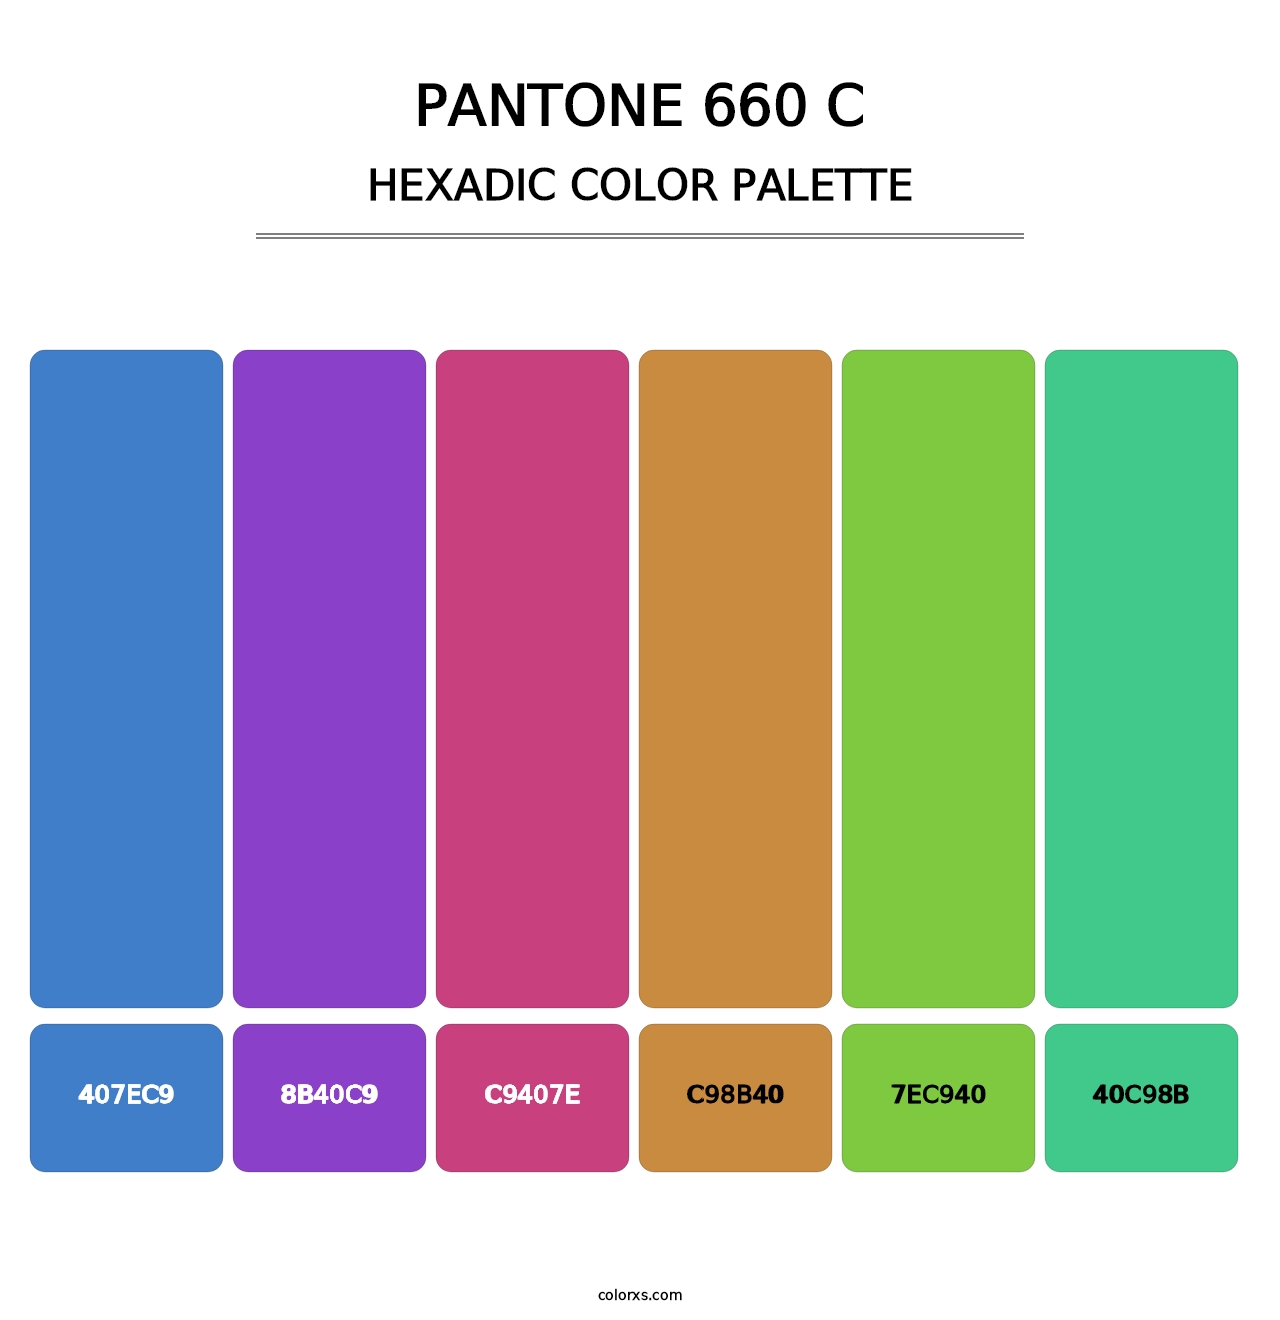 PANTONE 660 C - Hexadic Color Palette